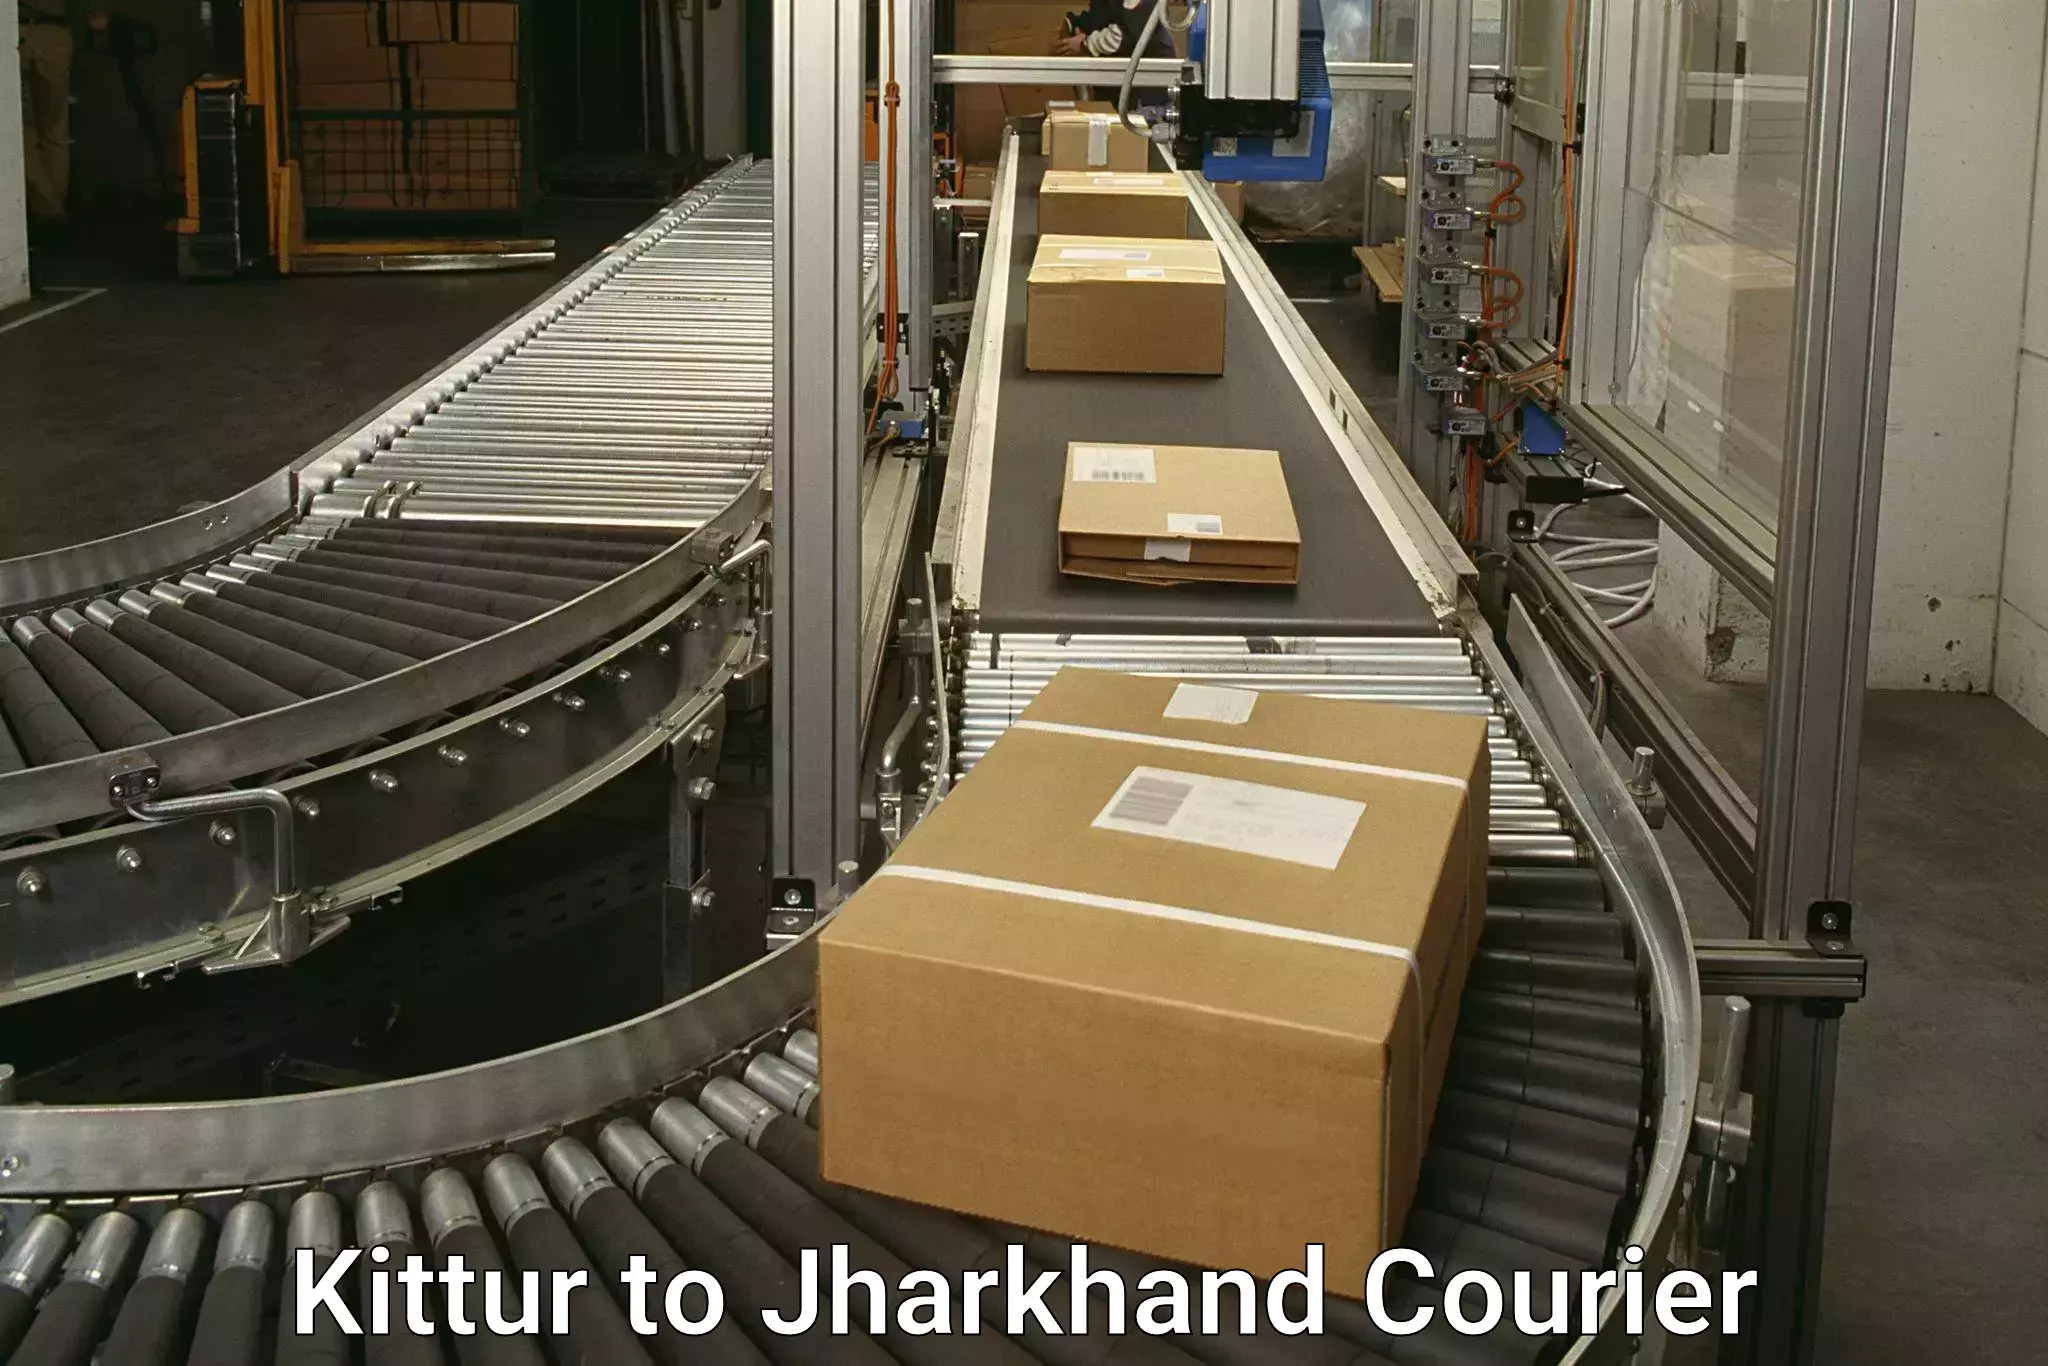 High-speed parcel service Kittur to Palojori